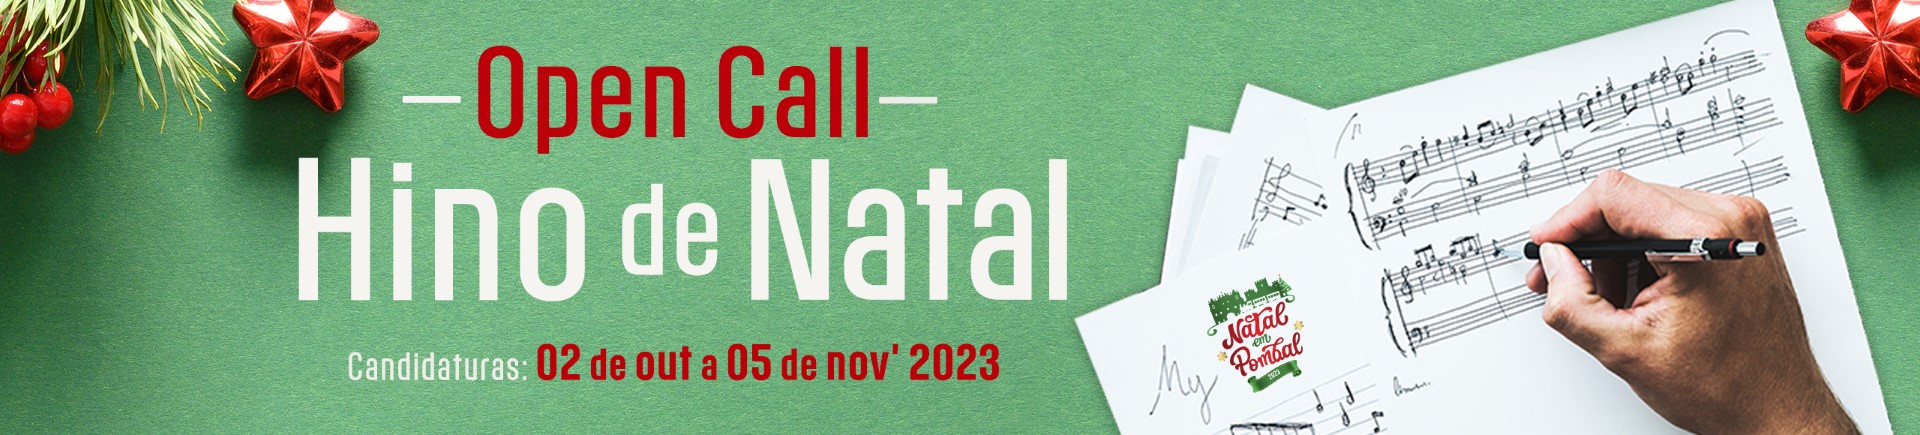 Open Call Hino Natal